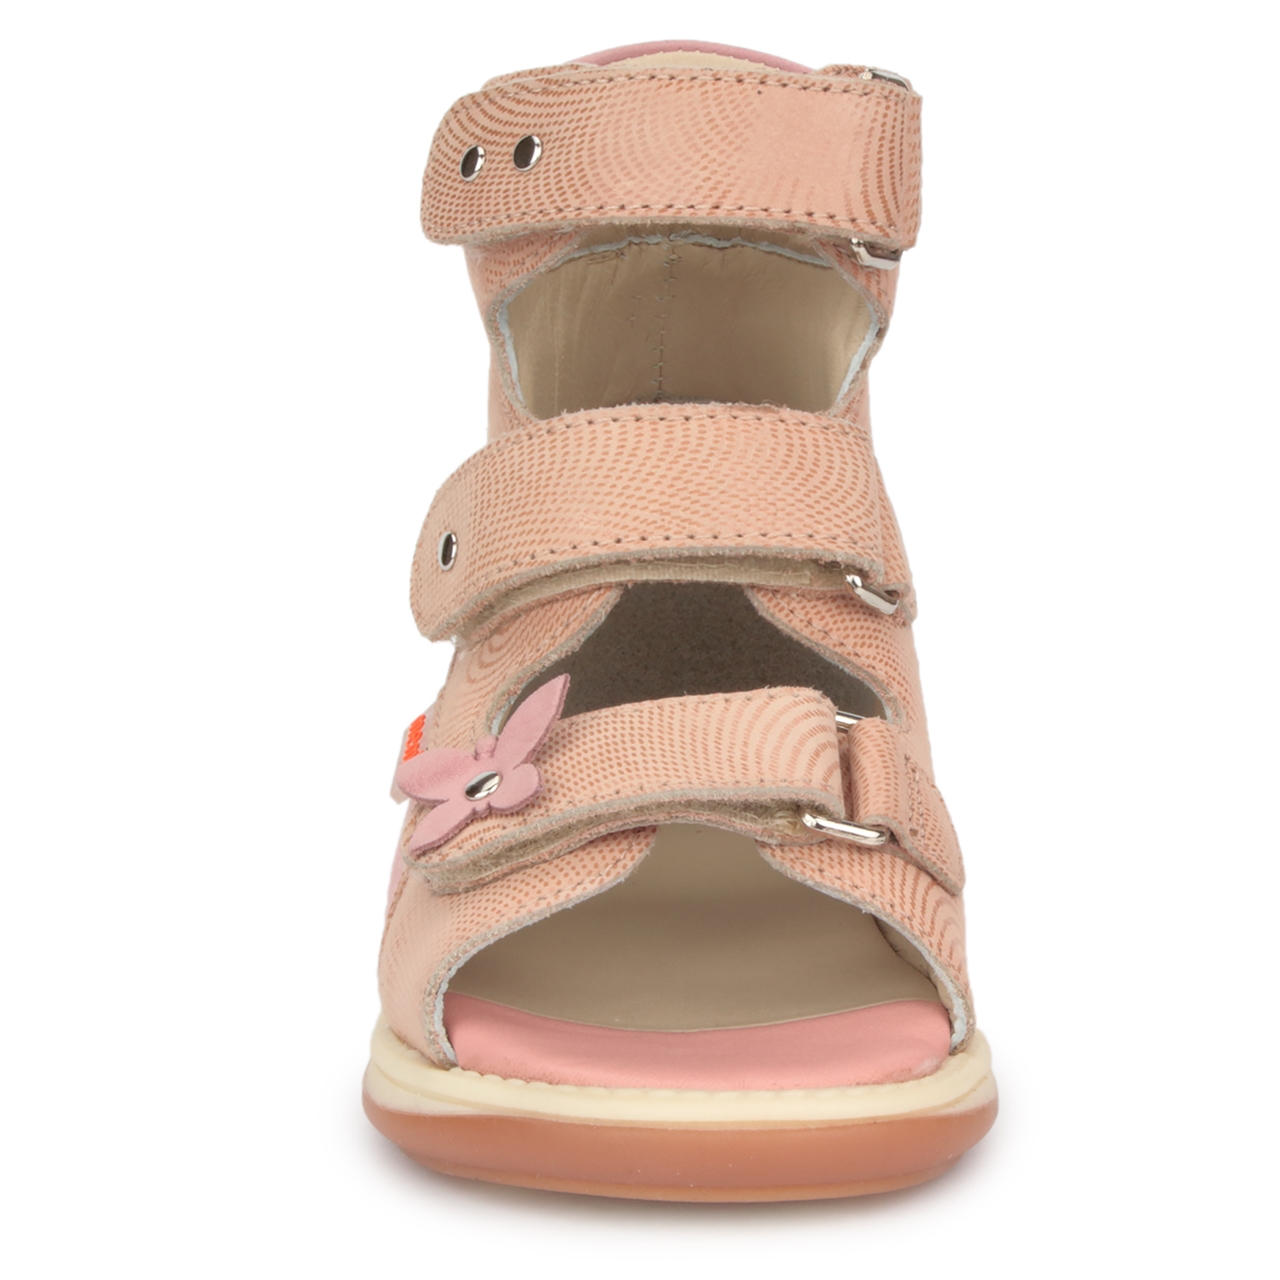 Memo AGNES Girls' Corrective Orthopedic Ankle Support Sandals Toddler/Little Kid 